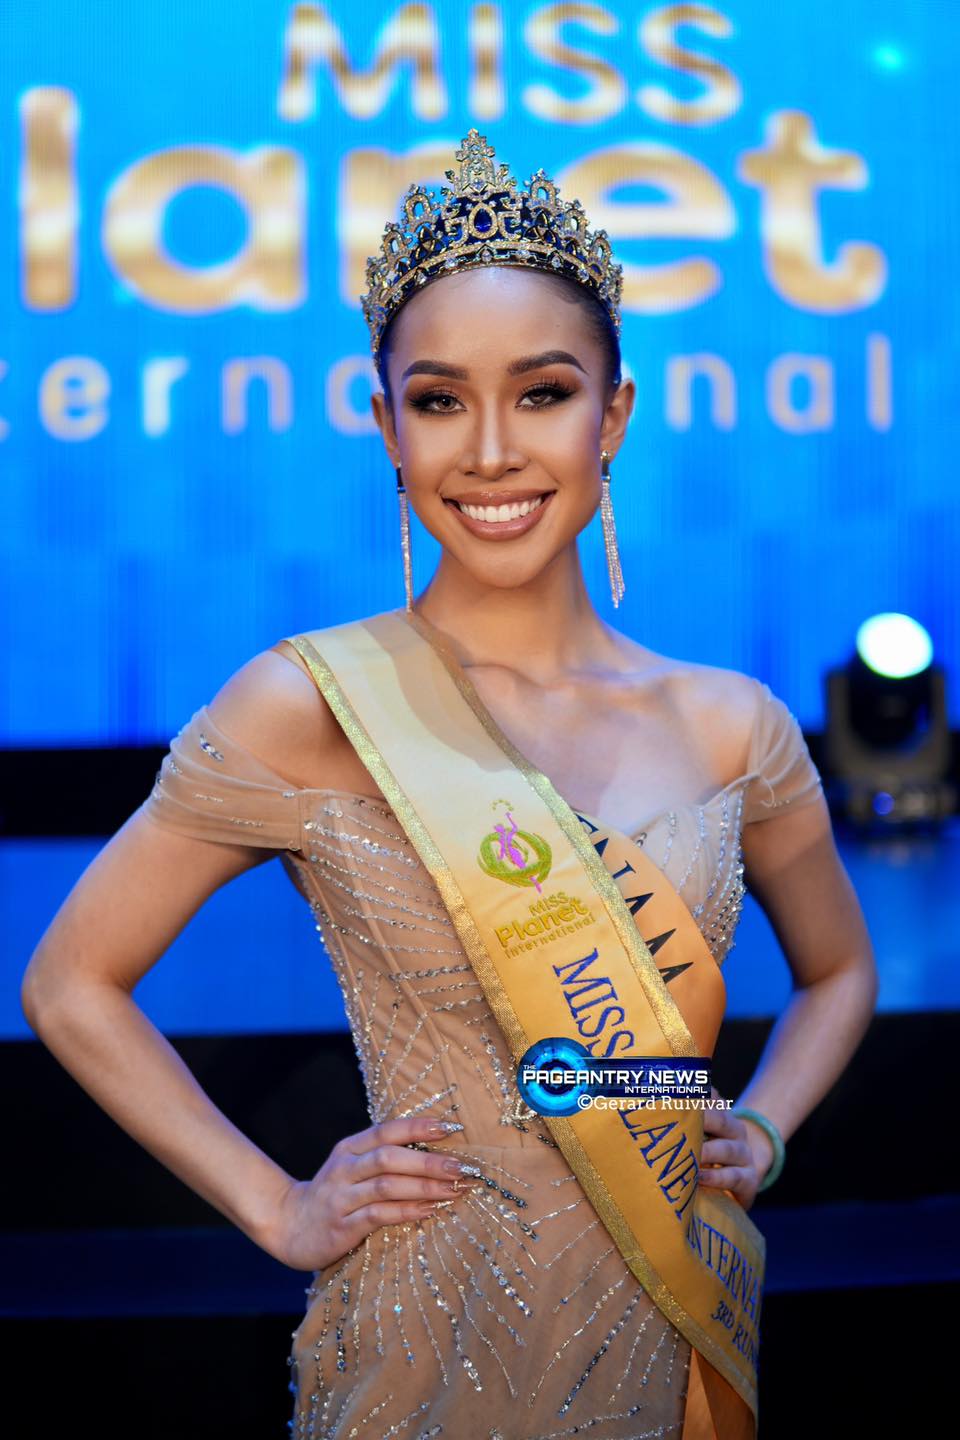 Philippines’ Maria Luisa Abaño Varela Wins Miss Planet International 2022! 32797710